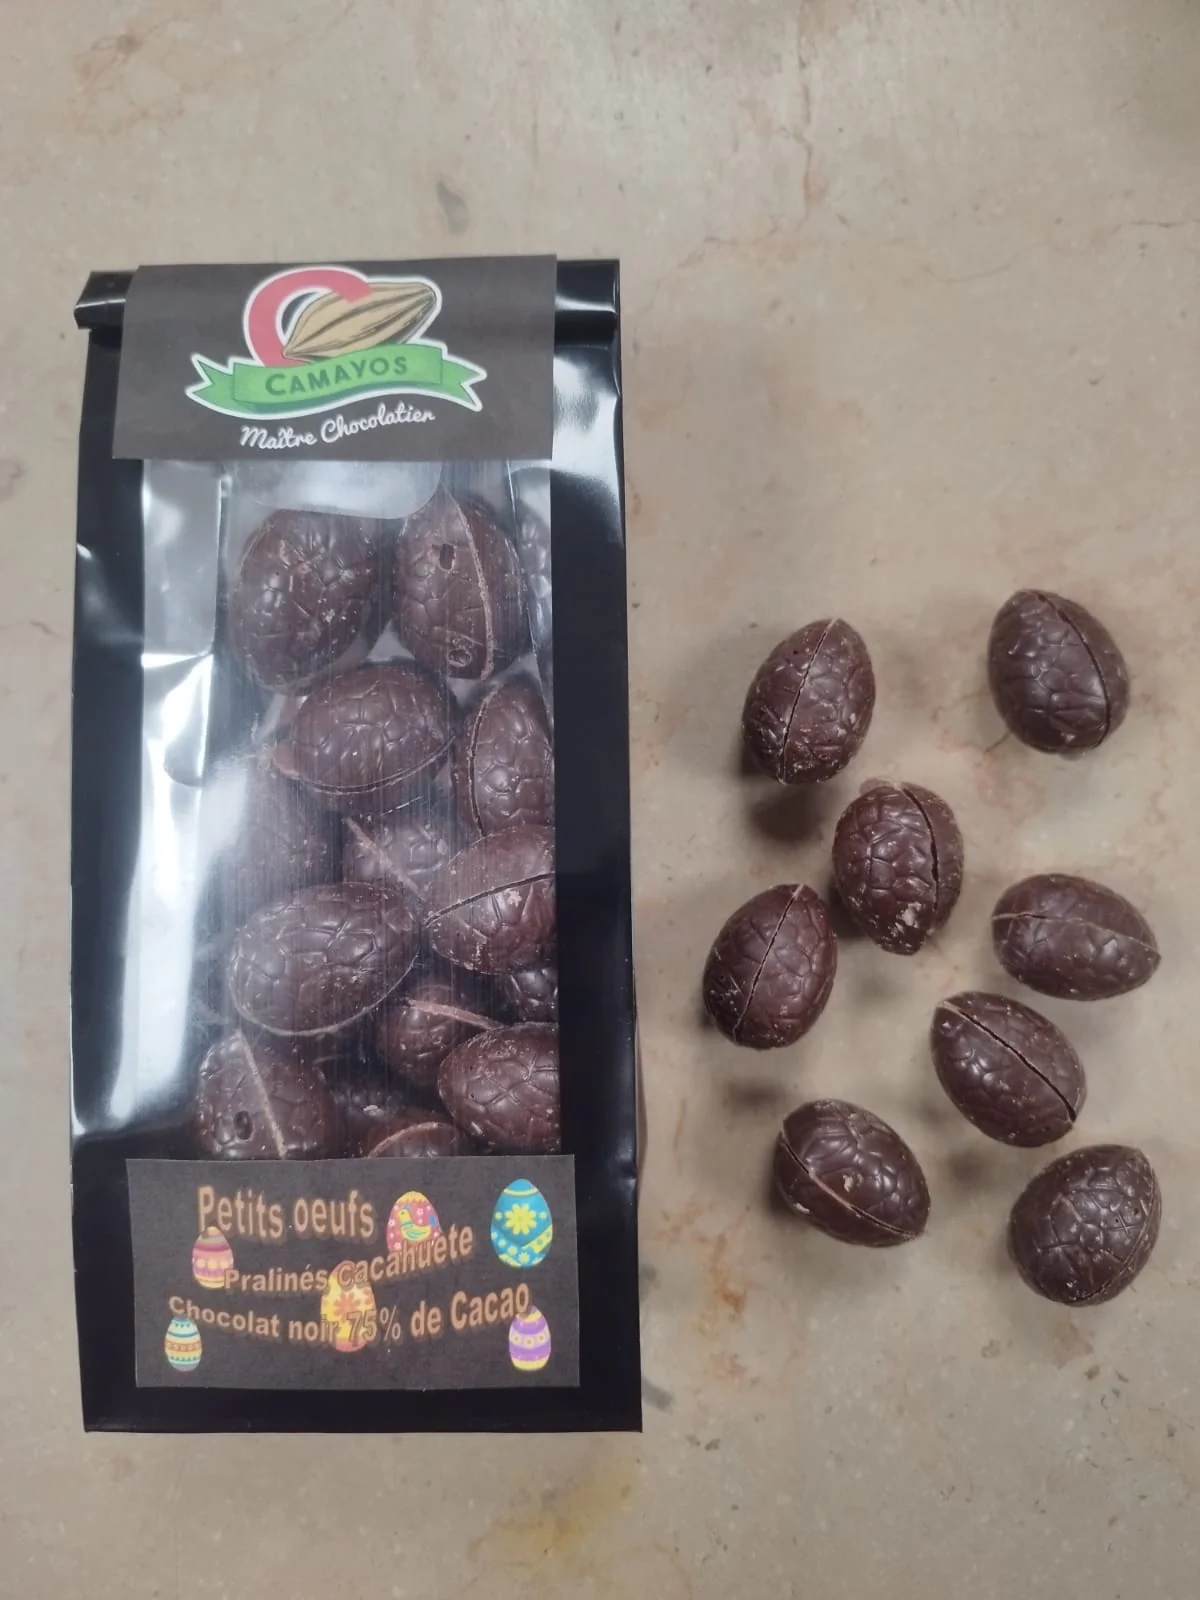 Les Petits œufs pralinés cacahuète au chocolat noir 75% - Camayos